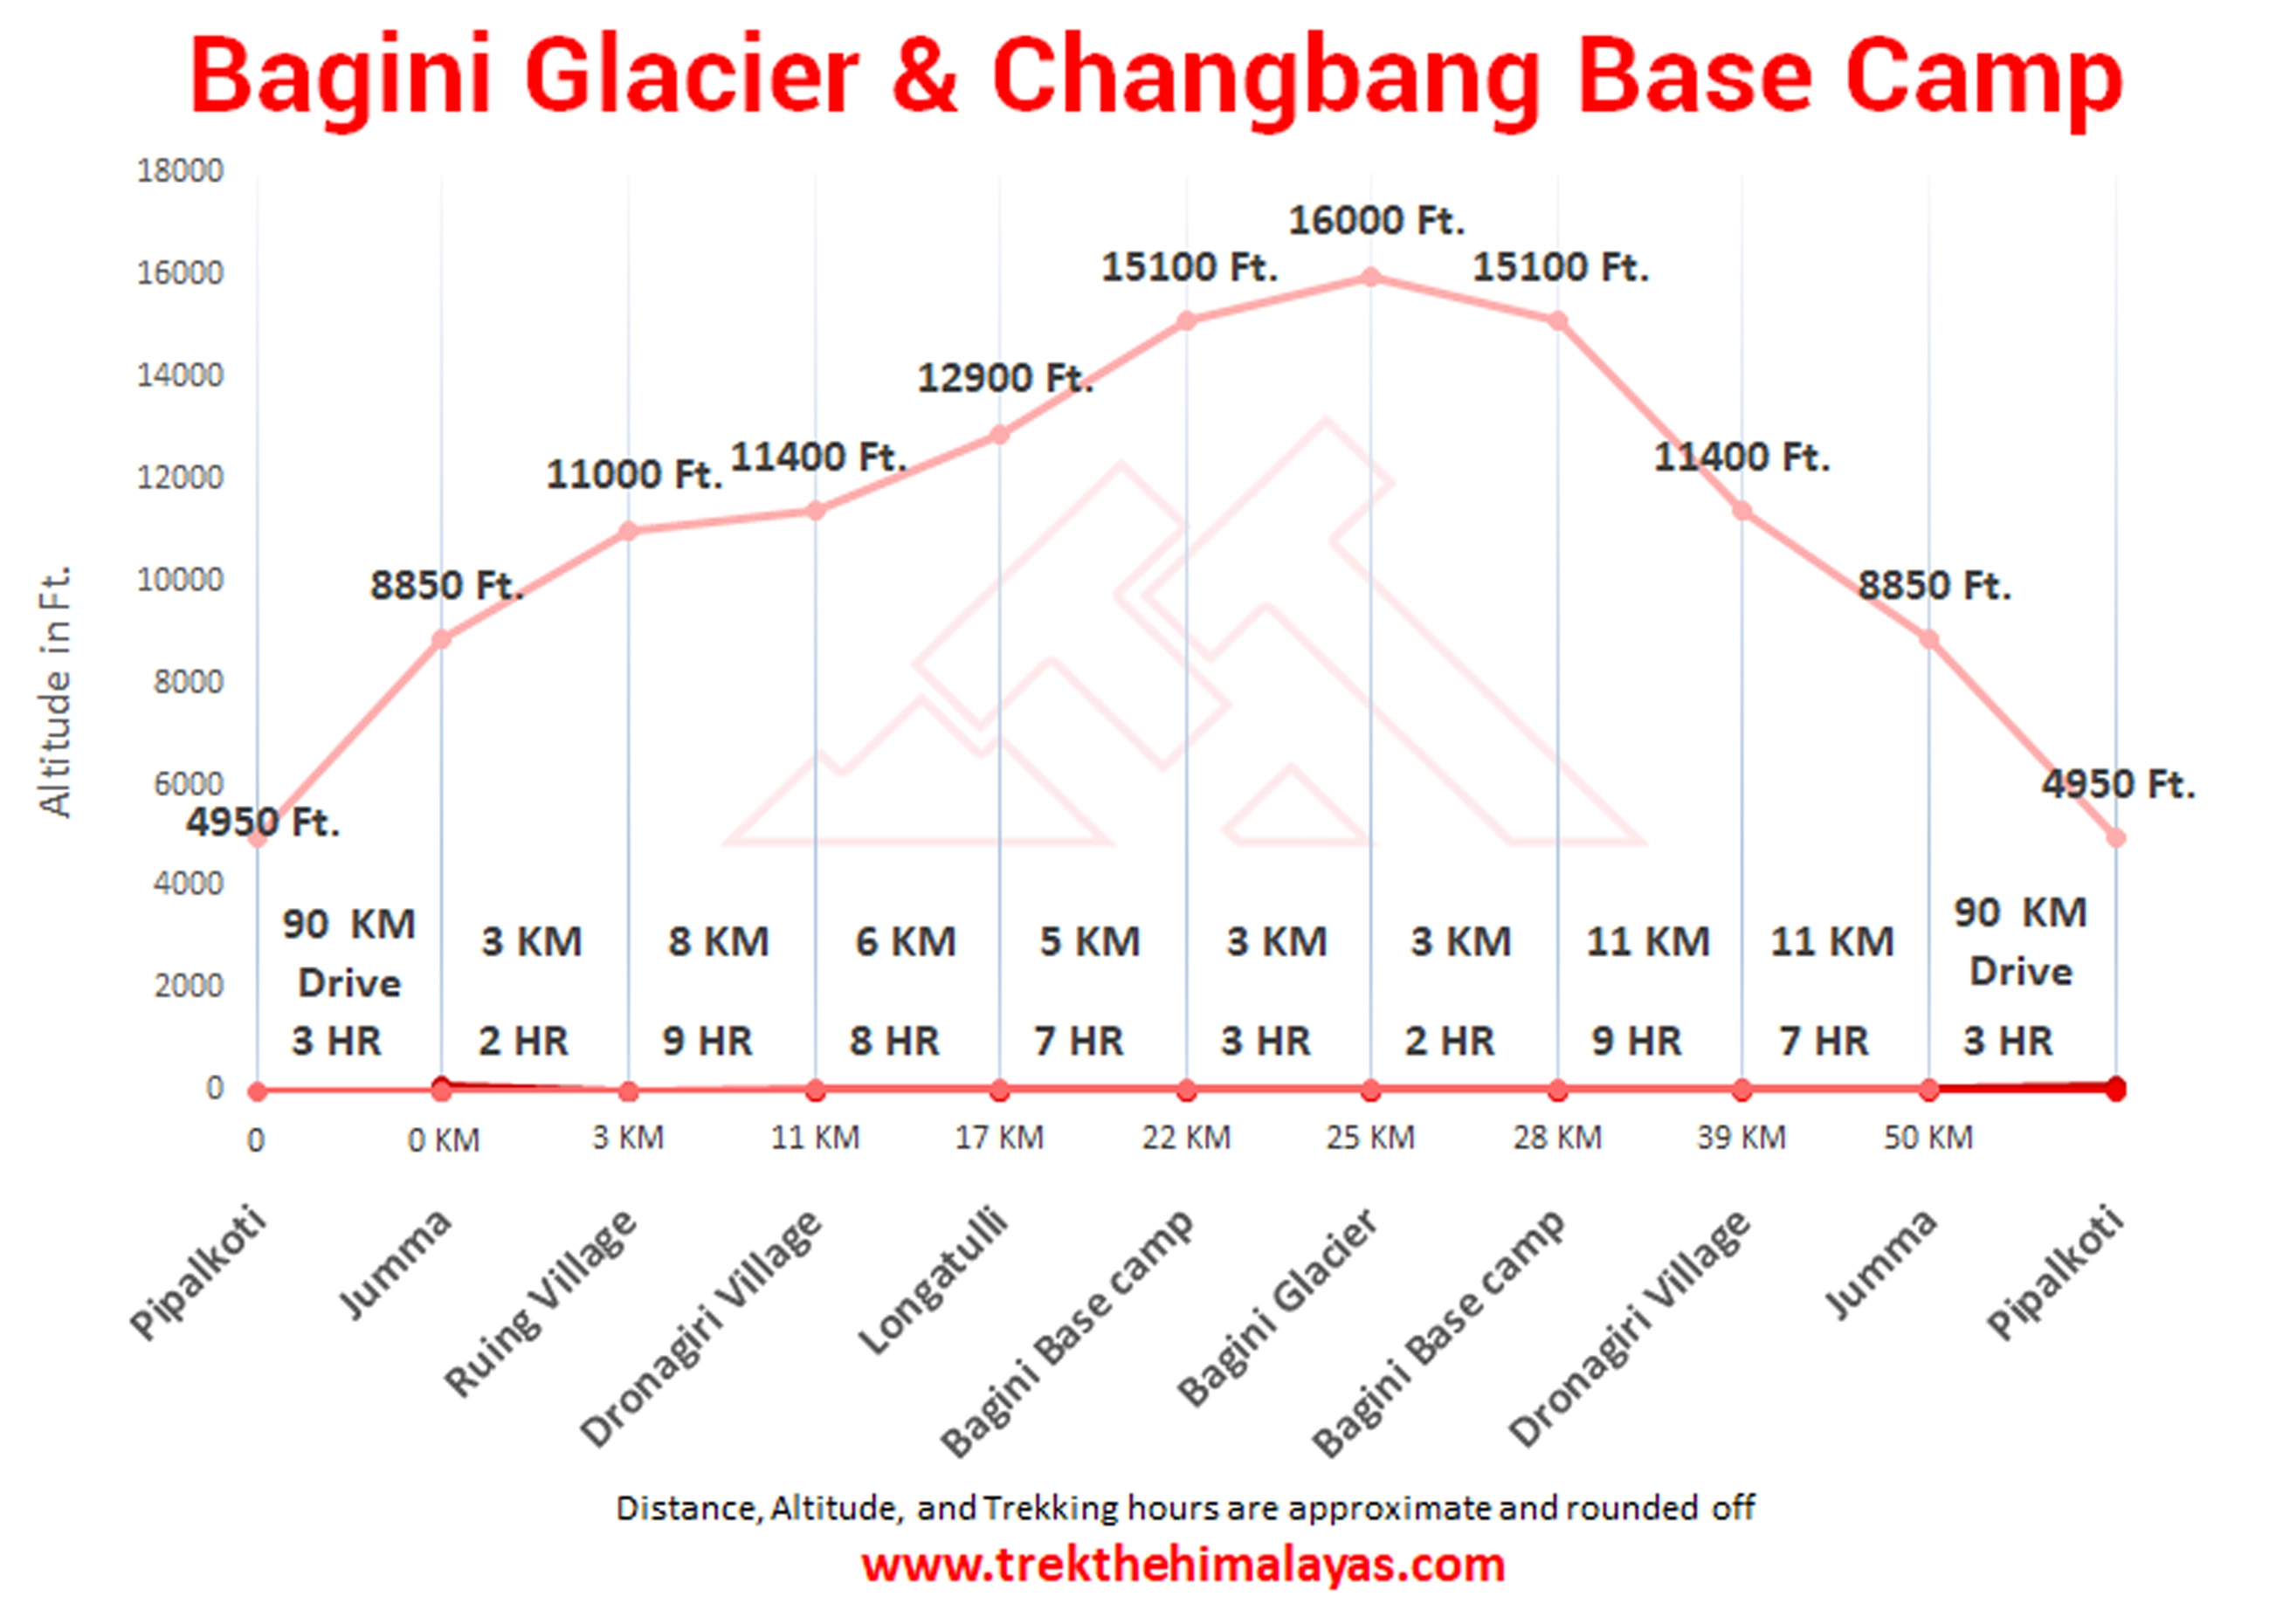 Bagini Glacier & Changbang Base Camp Maps